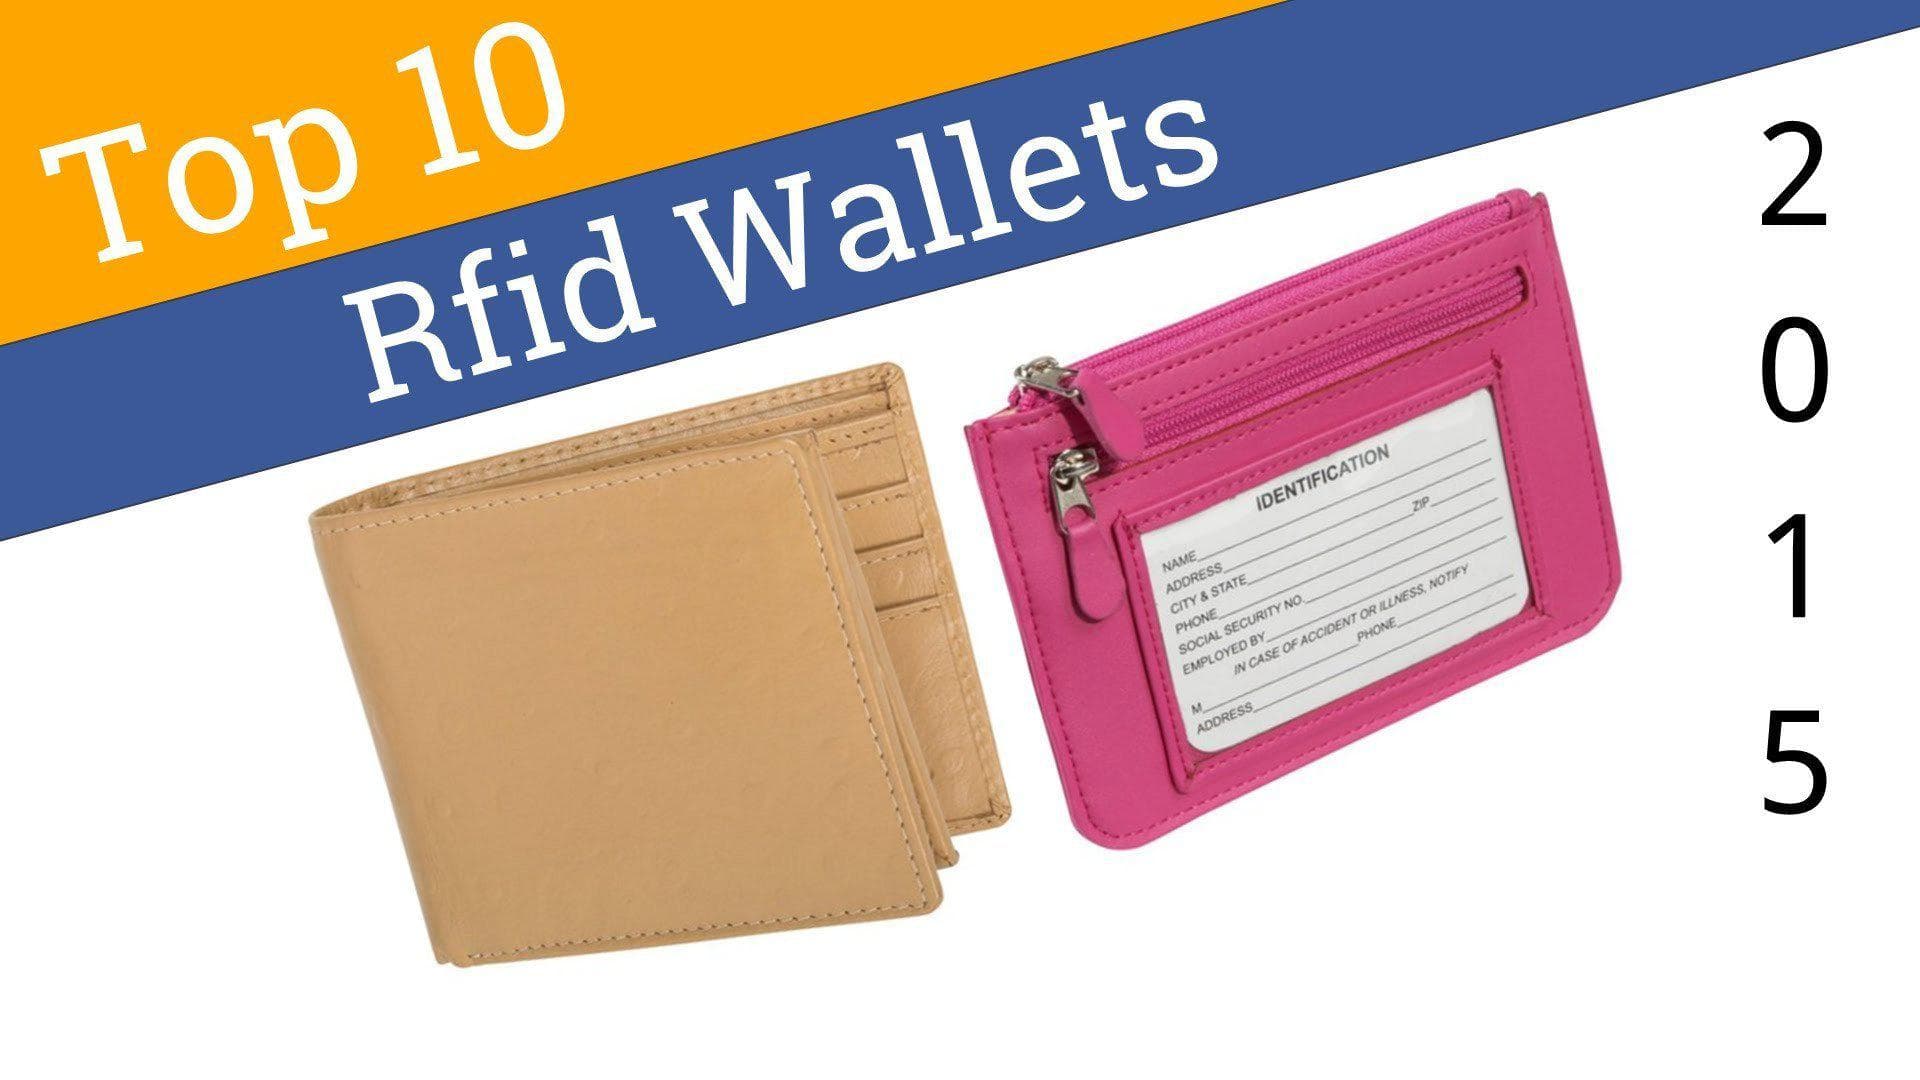 Top 10 RFID wallets of 2015